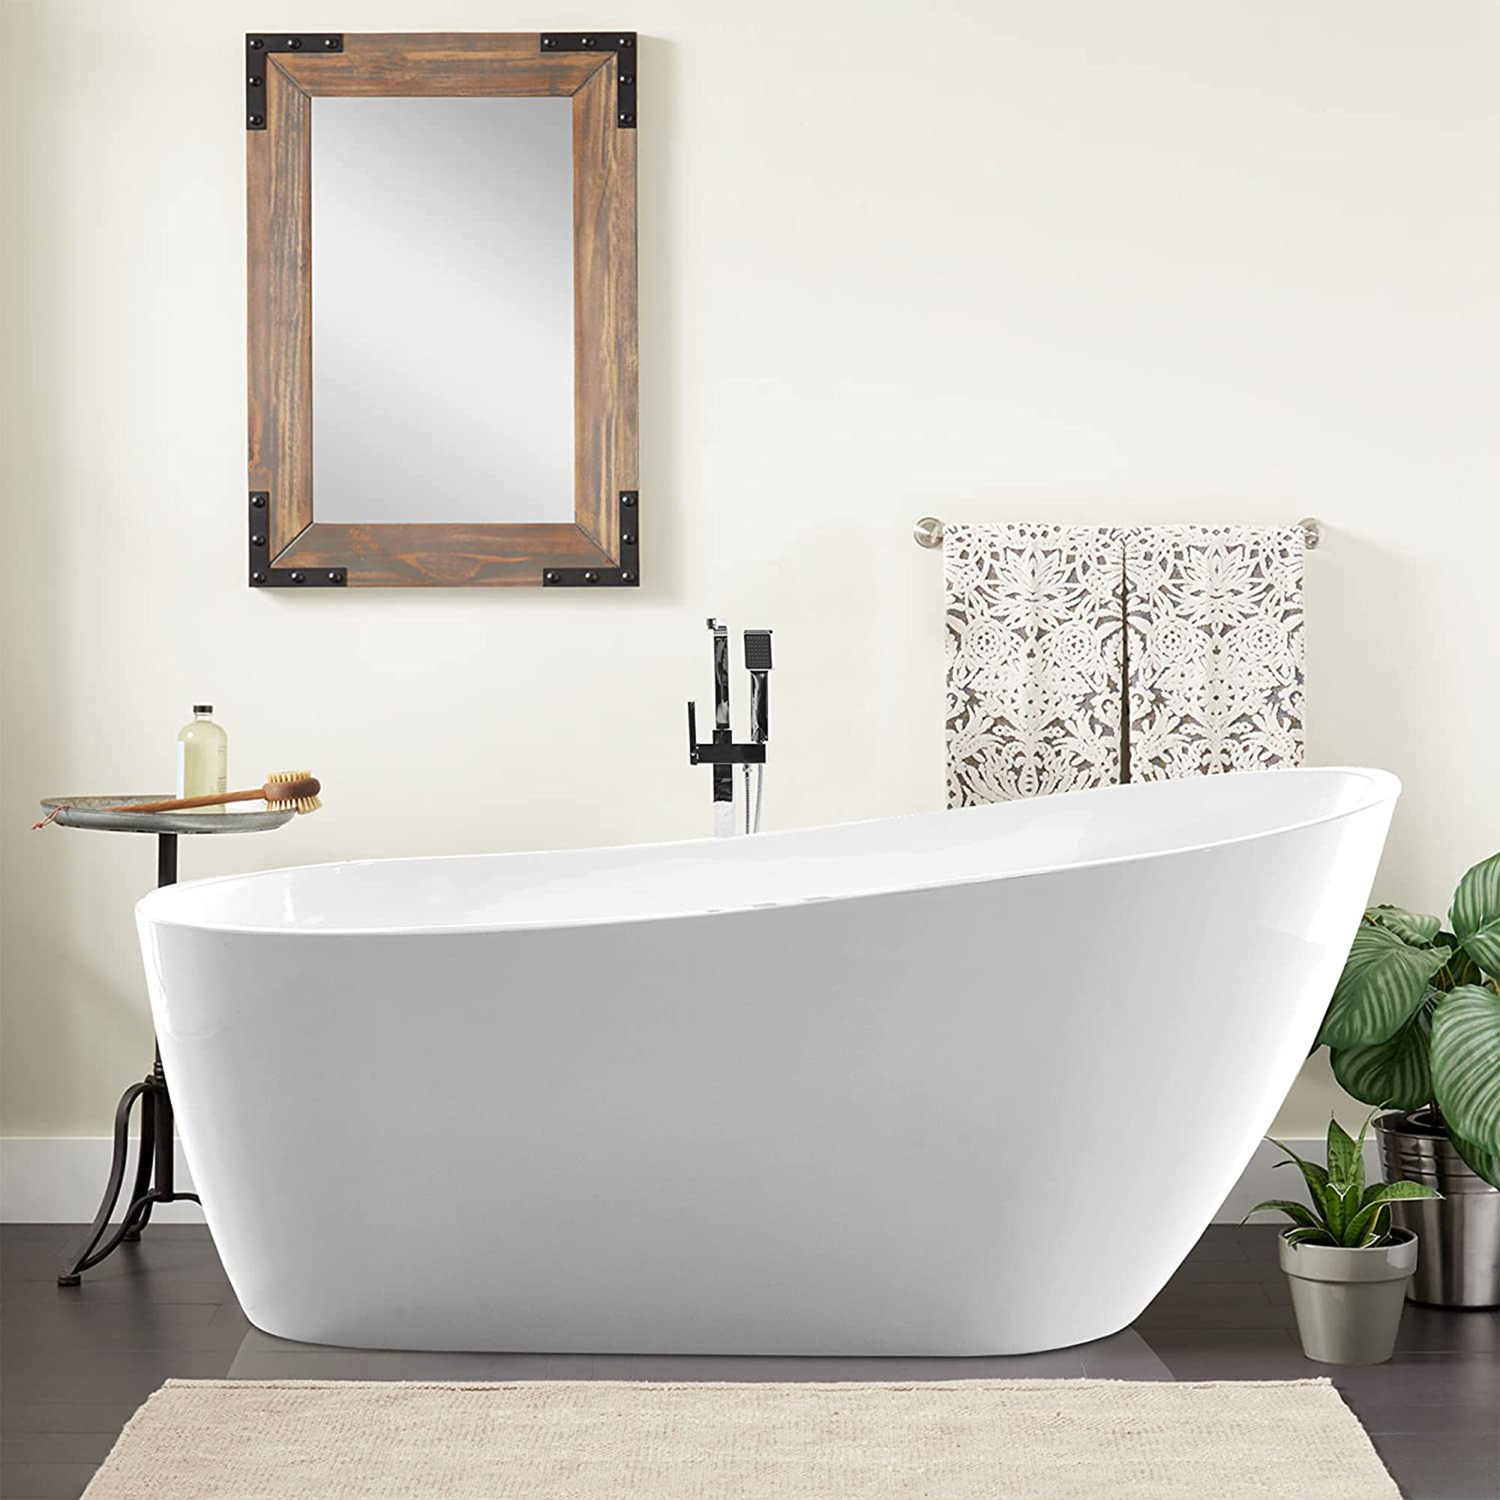 Factory Wholesale cUPC Acrylic Stand-alone Hot Bath Tub Contemporary Soaking Freestanding Bathtub